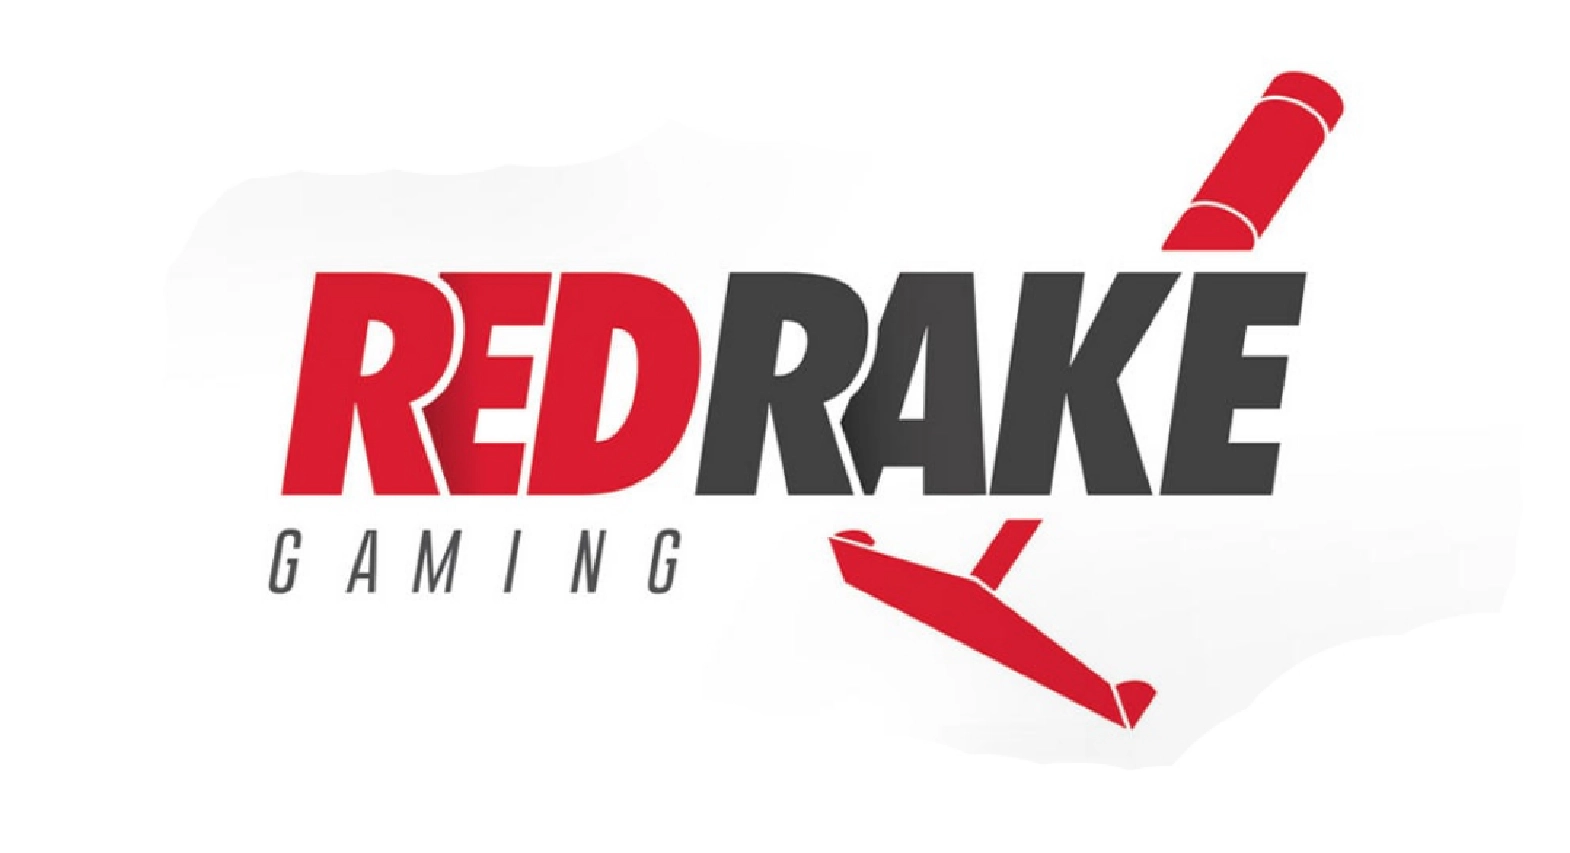 Red Rake рдЧреЗрдорд┐рдВрдЧ рдСрдирд▓рд╛рдЗрди рдХреИрд╕реАрдиреЛ 1win